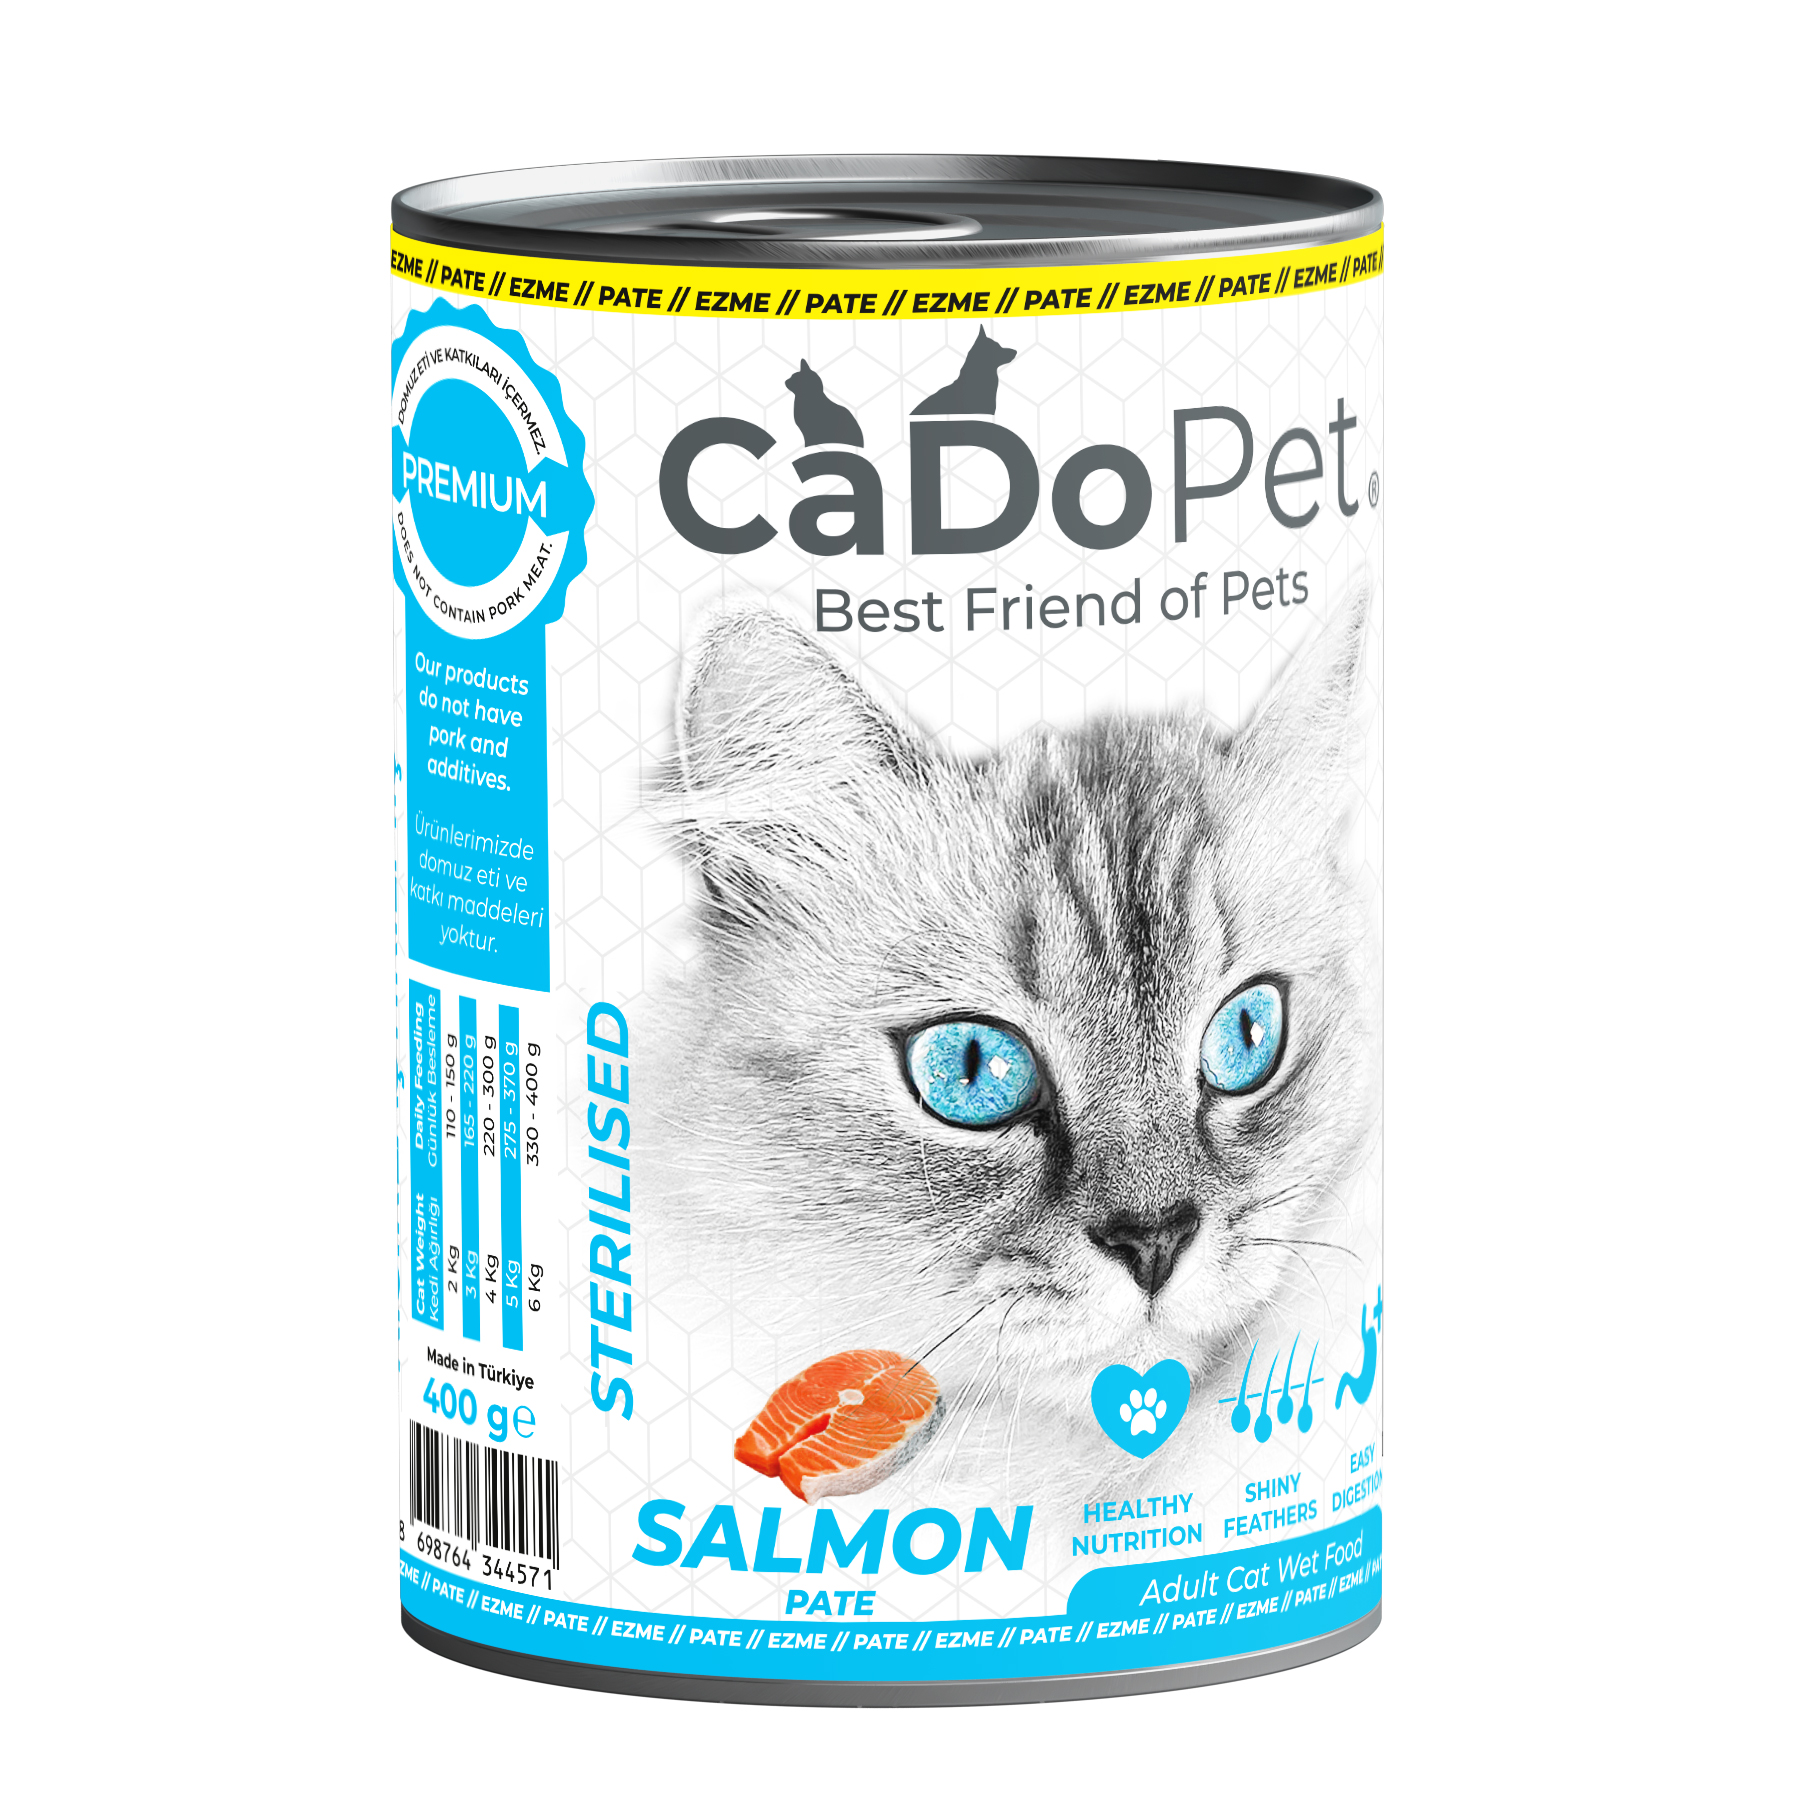 .Adult Cat Wet Food 400g with Salmon Sterilised Pate.